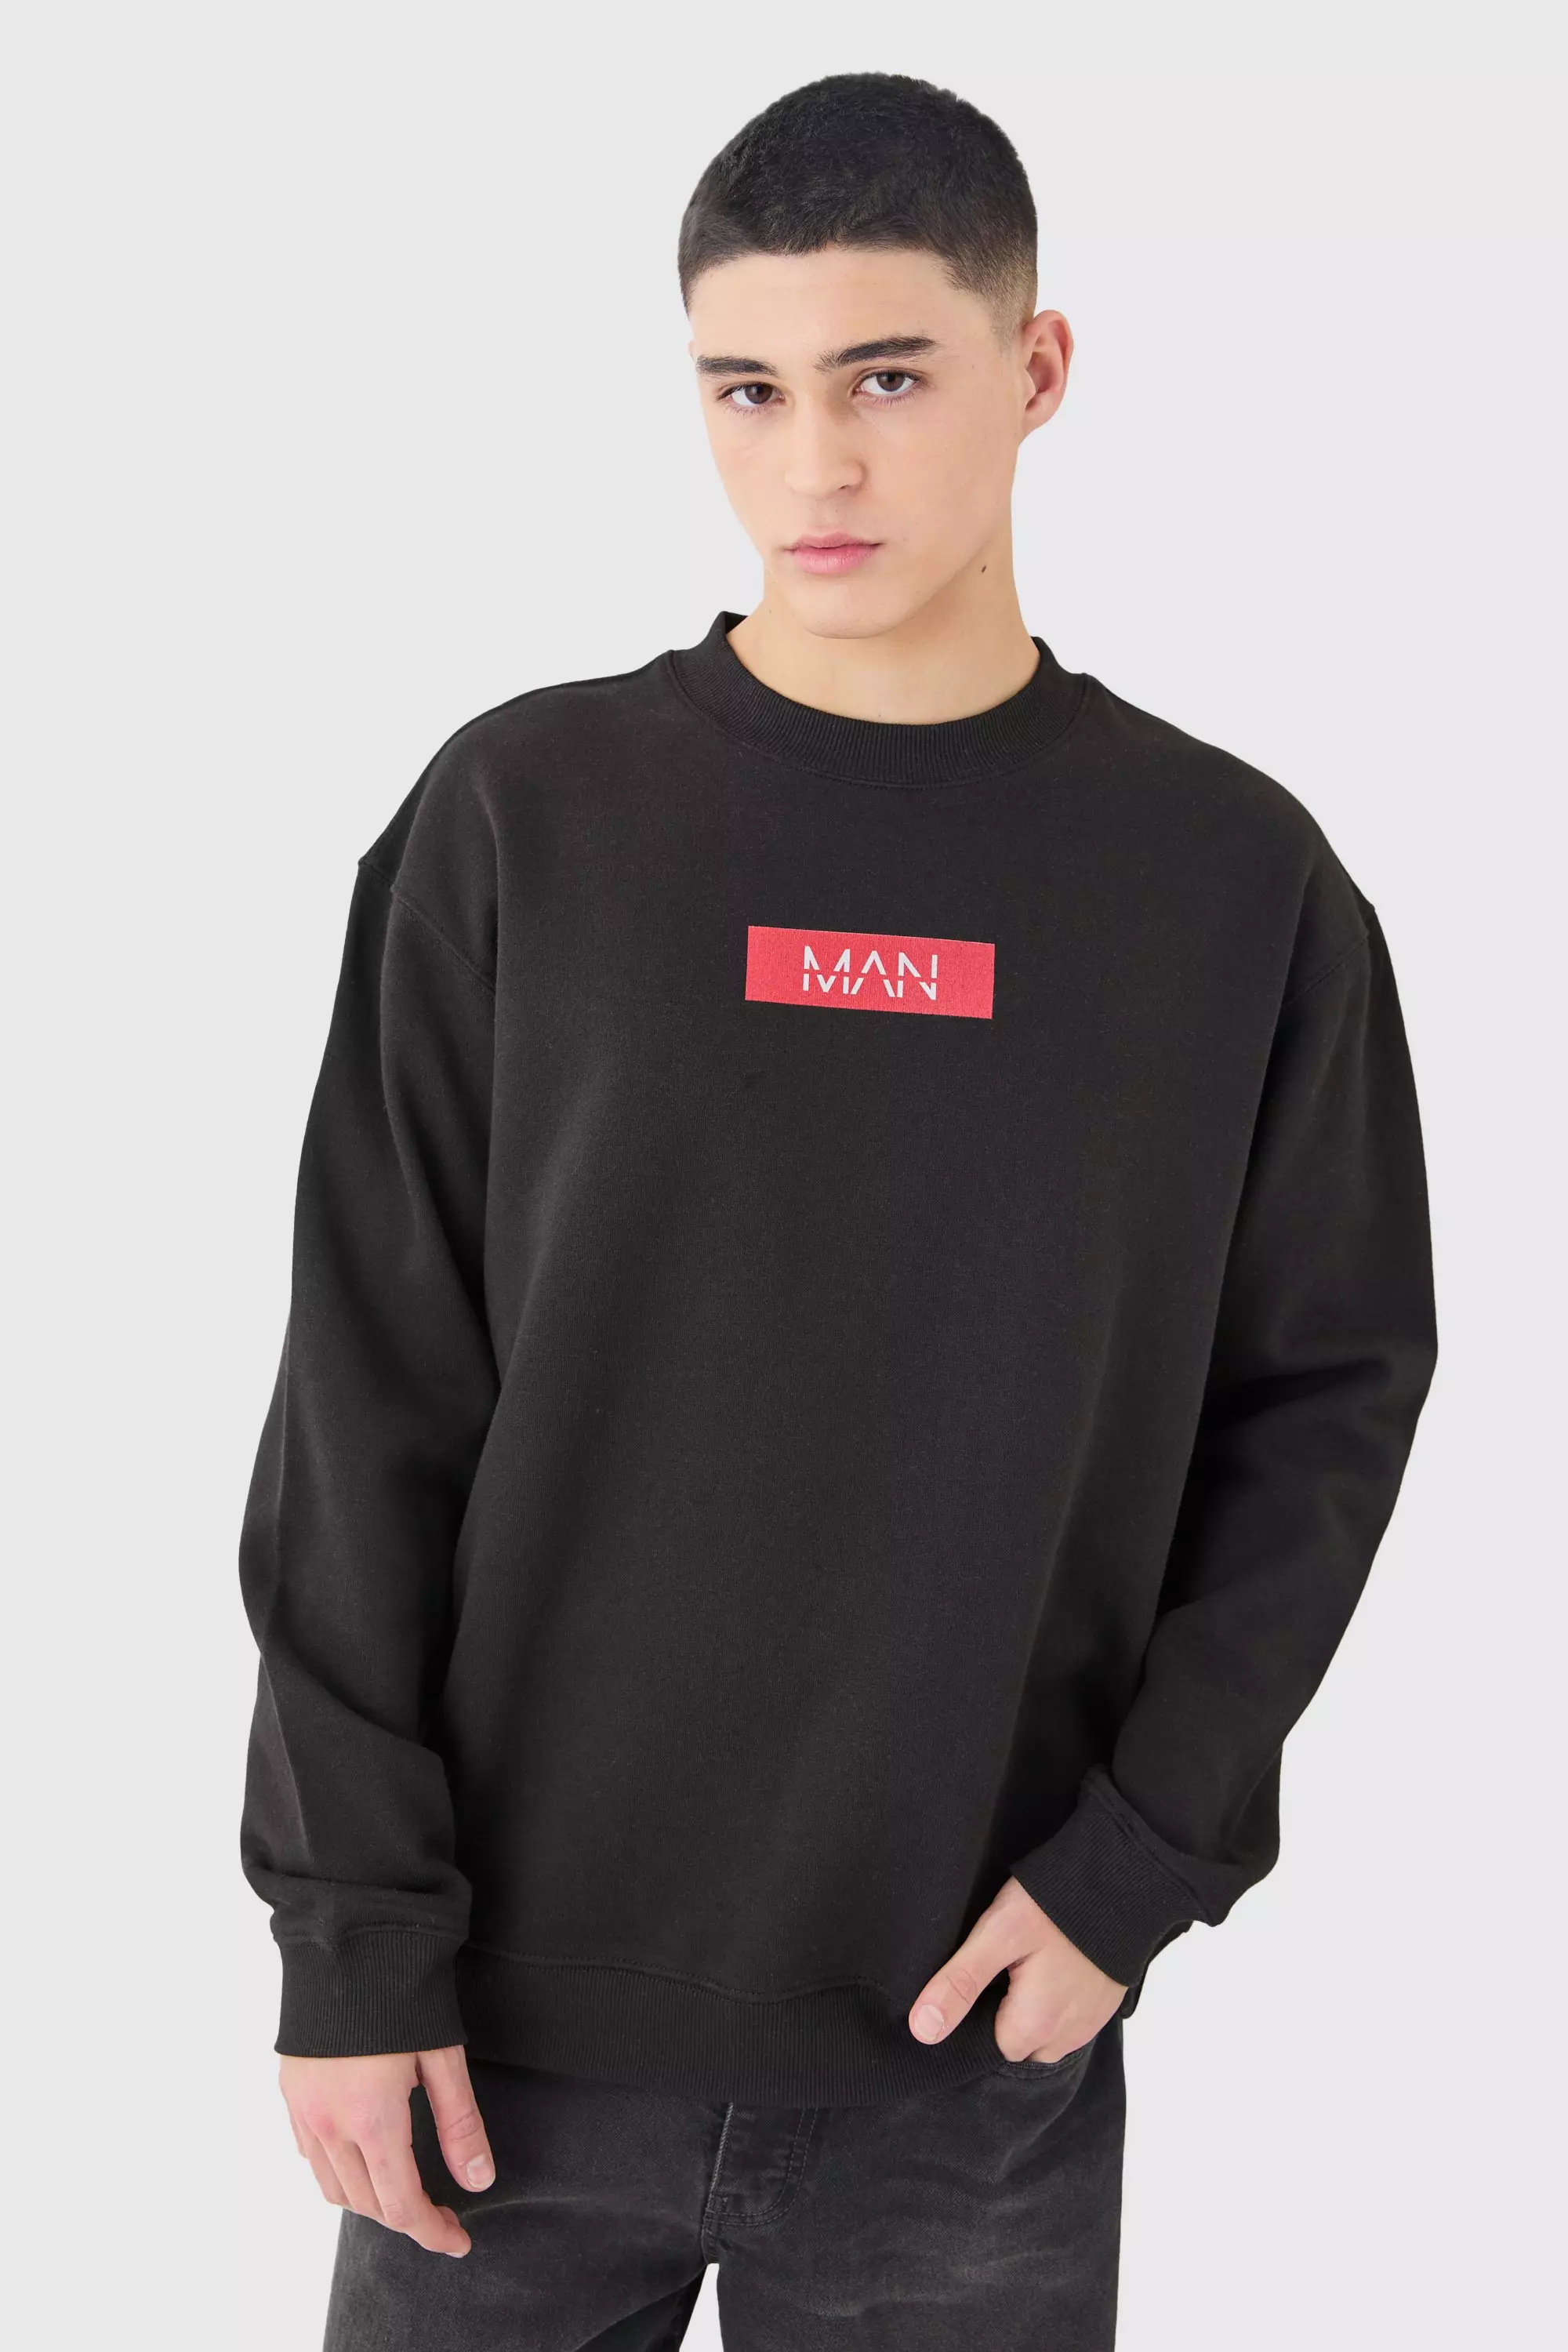 Man Print Sweatshirt Black